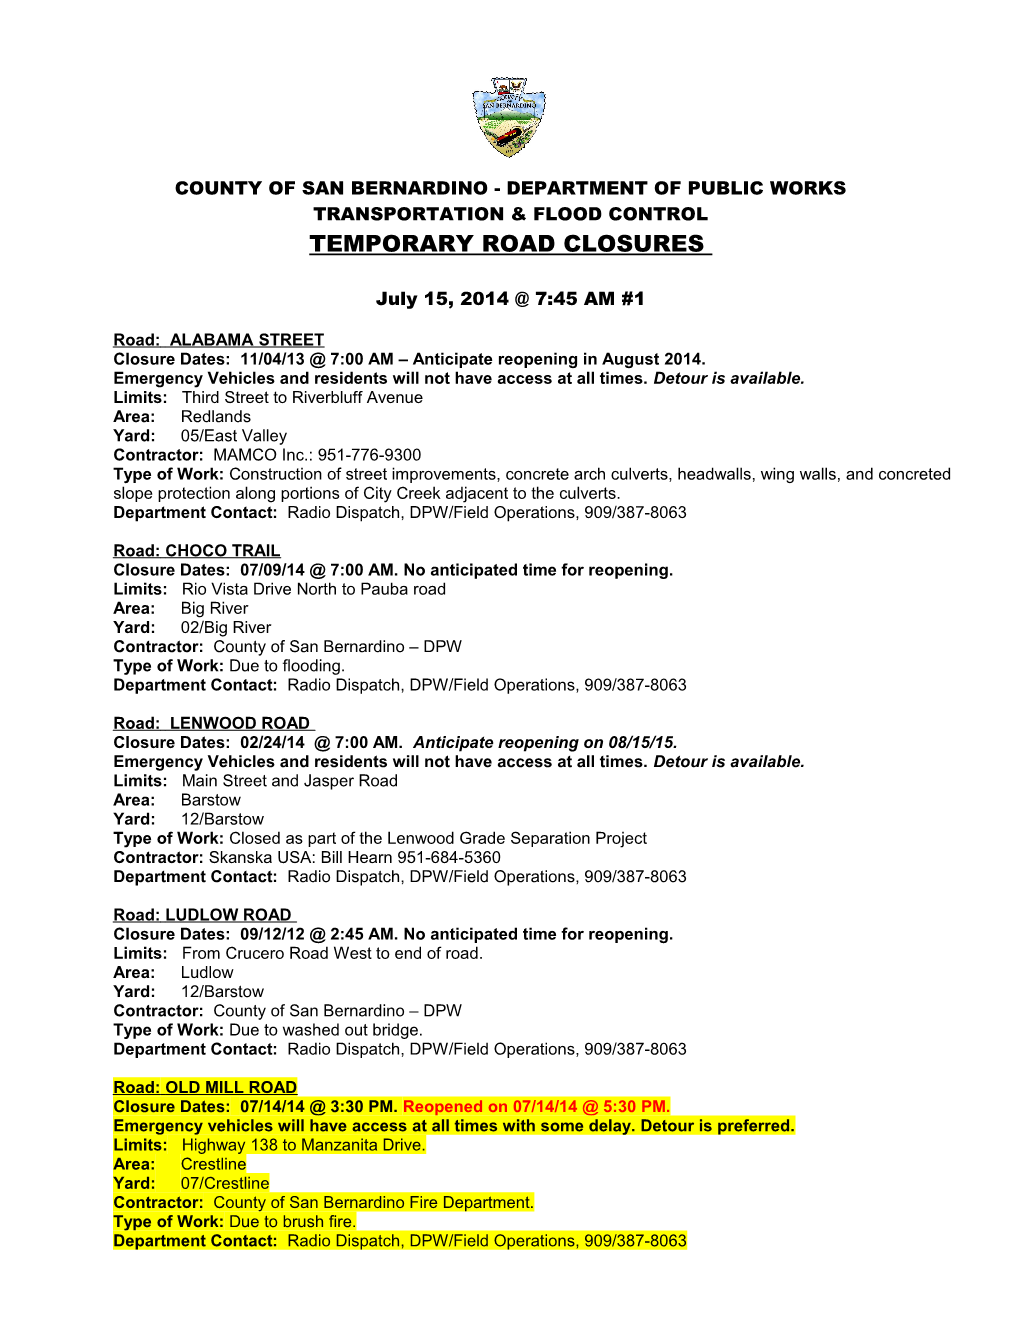 County of San Bernardino - Department of Public Works s1